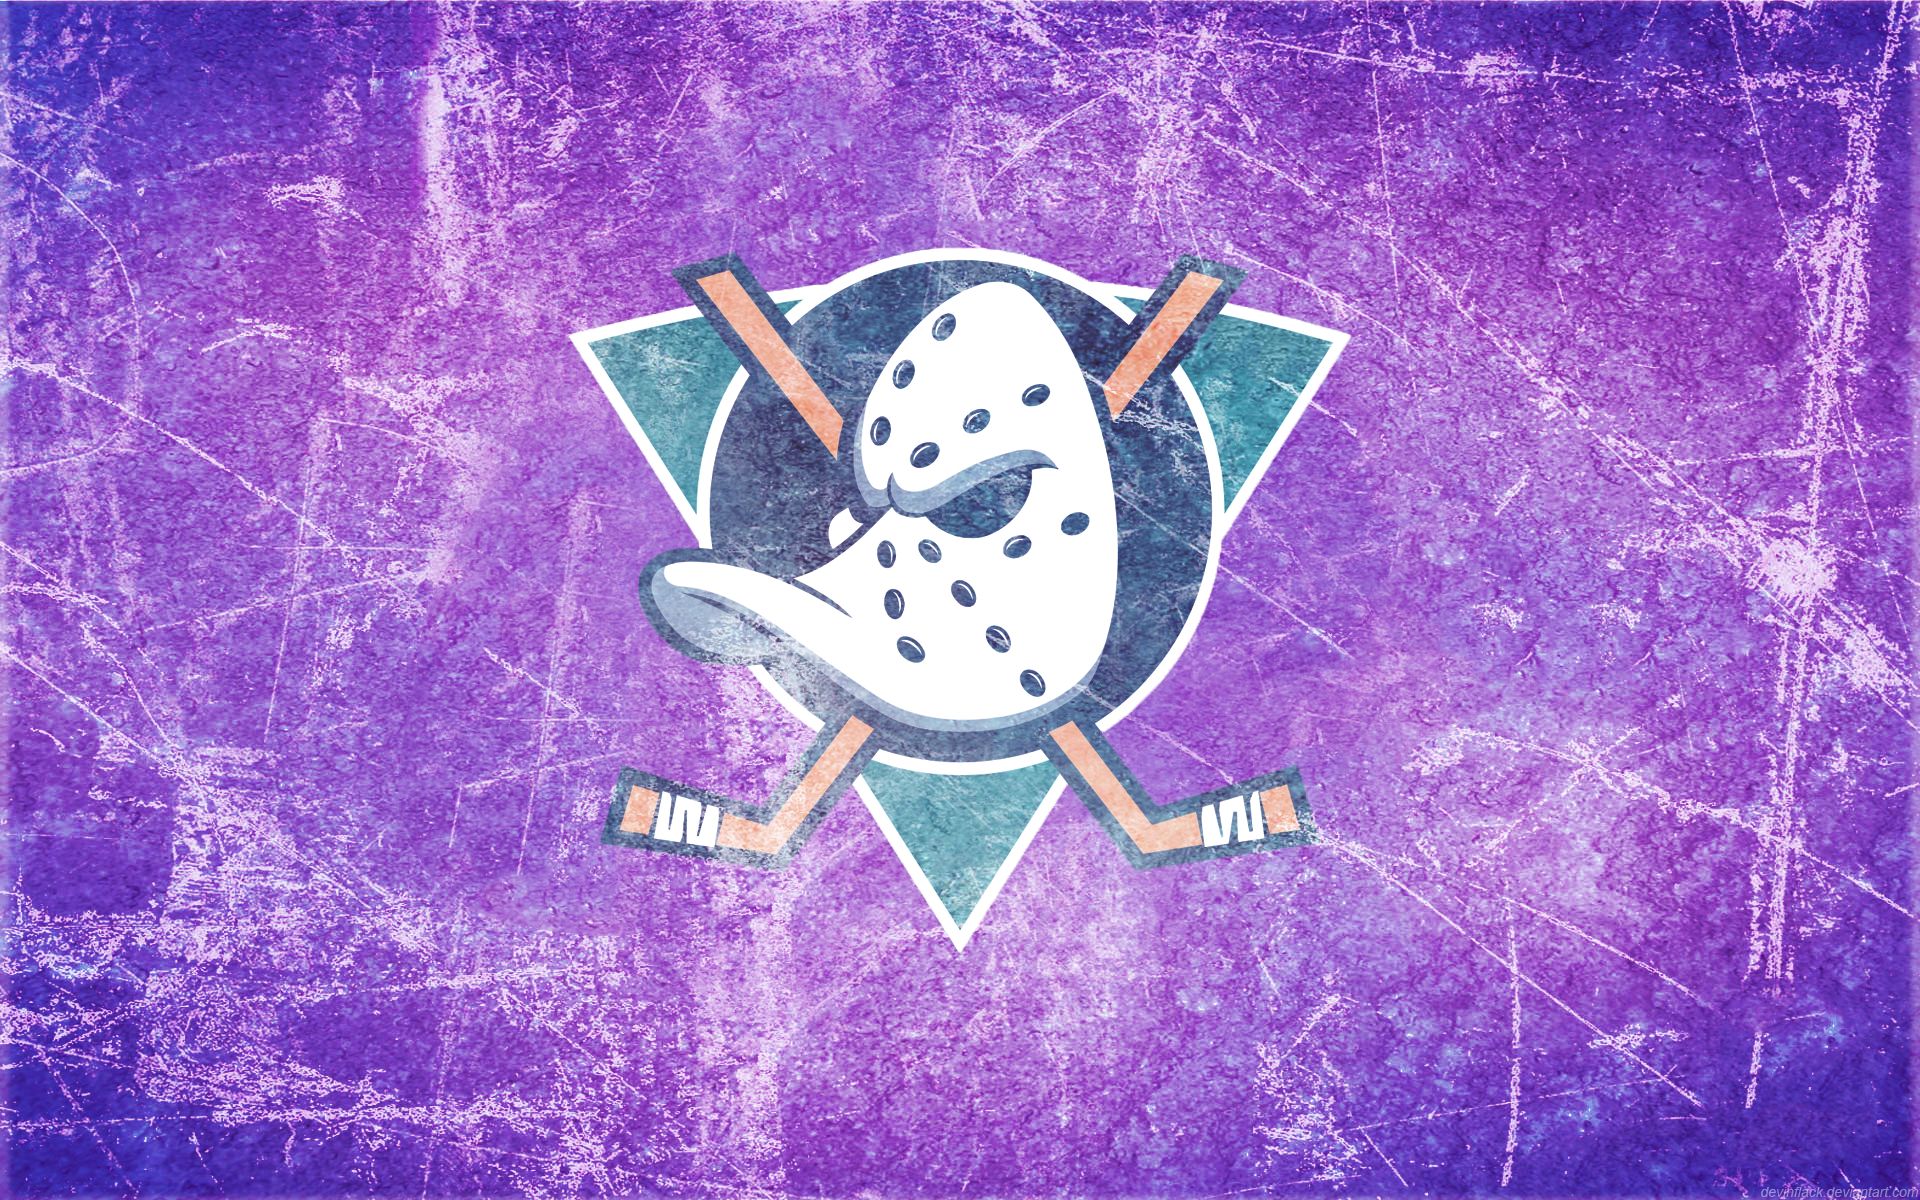 anaheim ducks, sports, emblem, logo, nhl, hockey